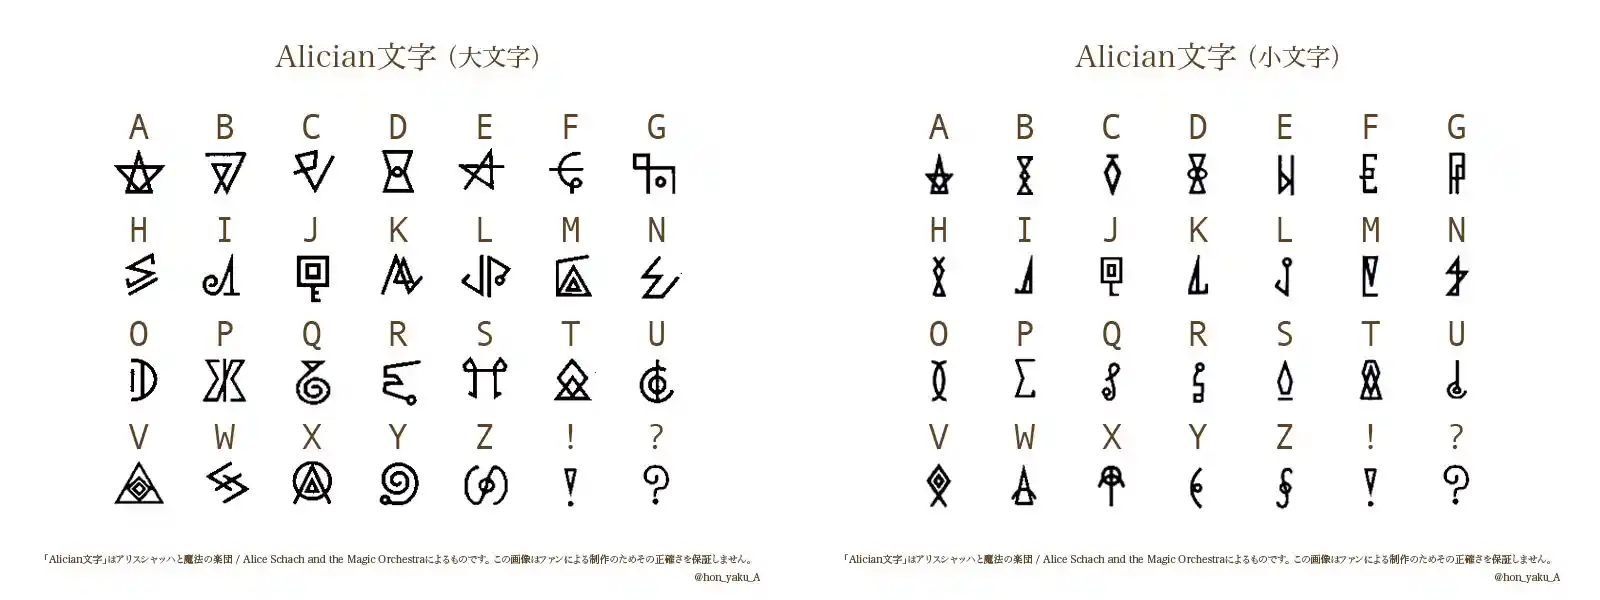 Alician-Alphabet